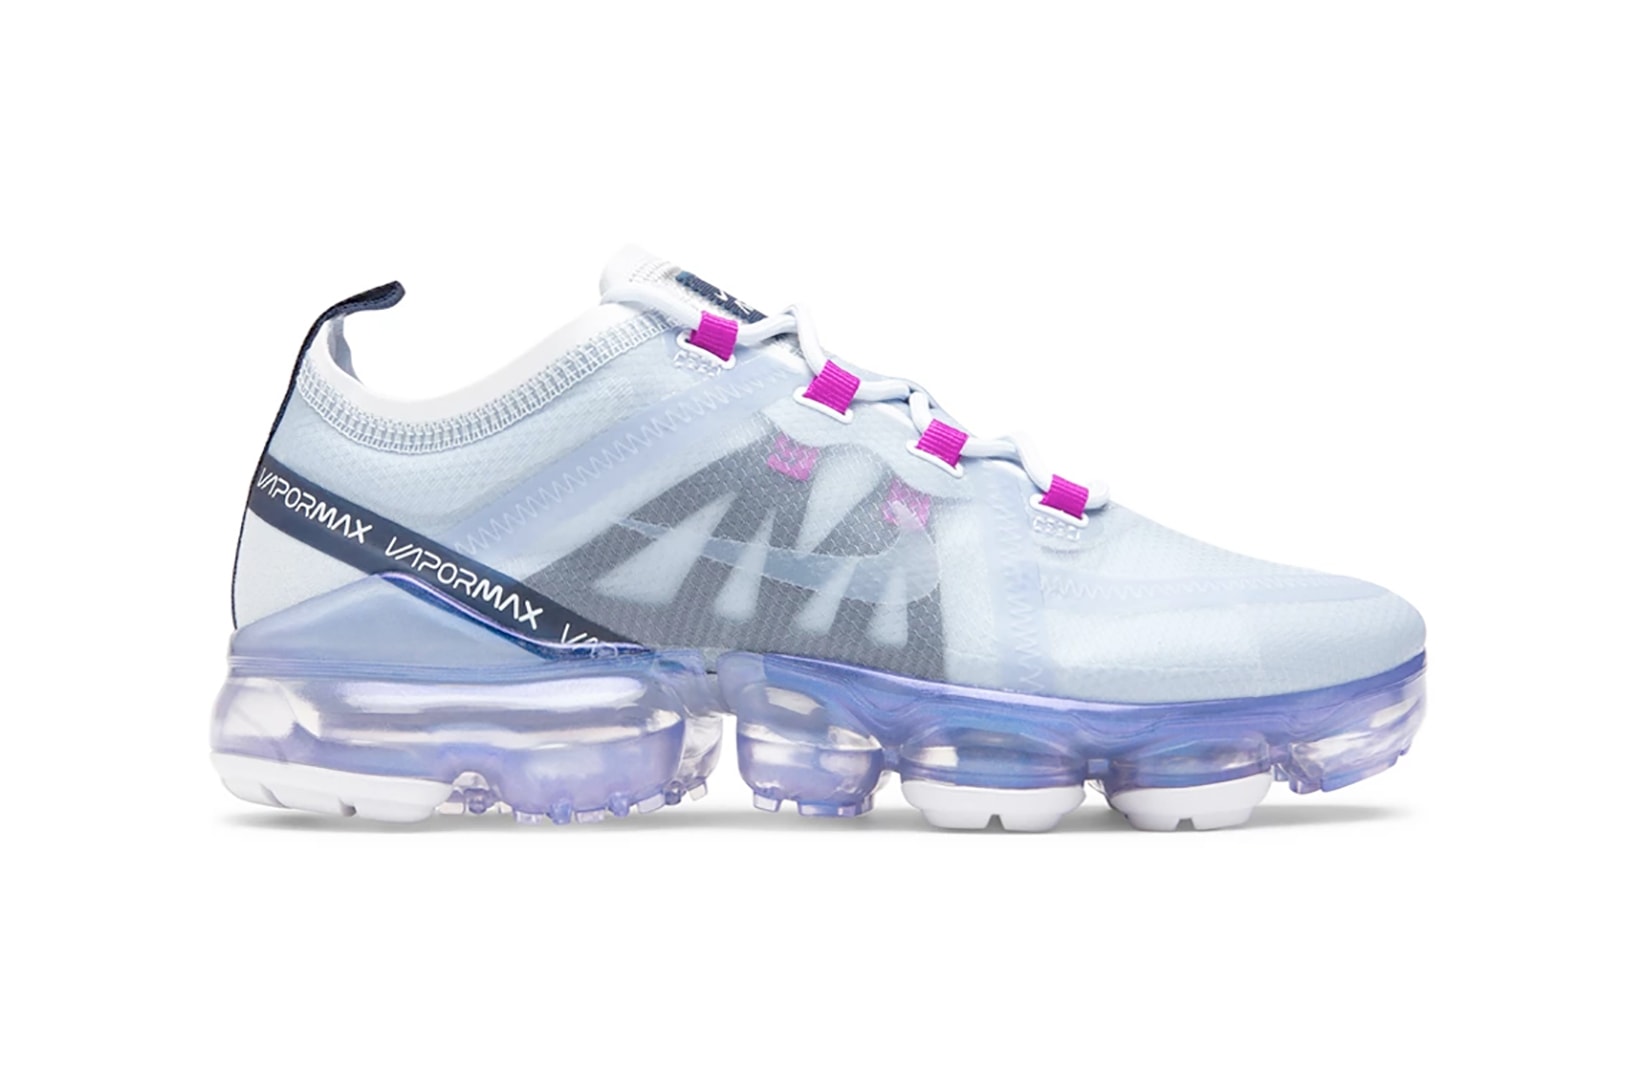 nike air vapormax womens sneakers lilac purple blue white footwear shoes sneakerhead